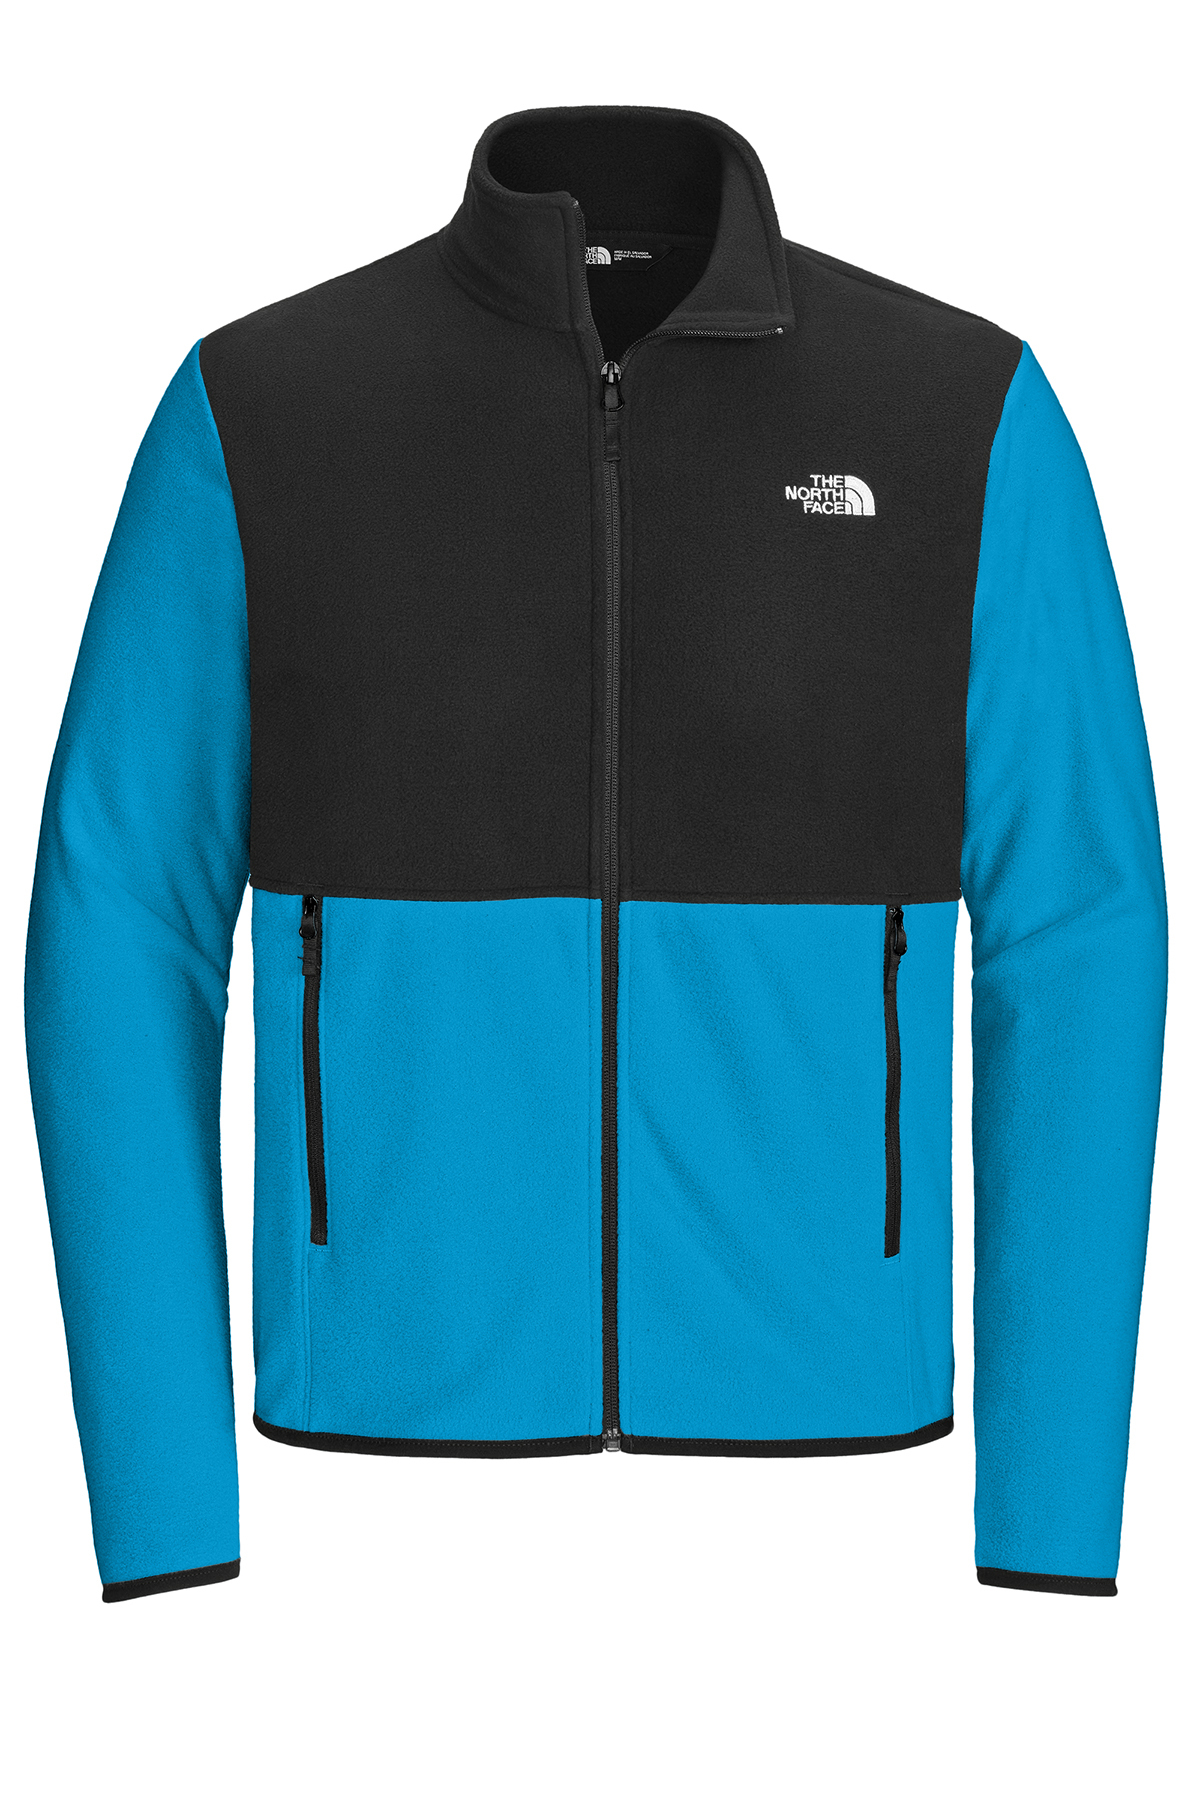 The North Face Glacier Full-Zip Fleece Jacket | Product | SanMar